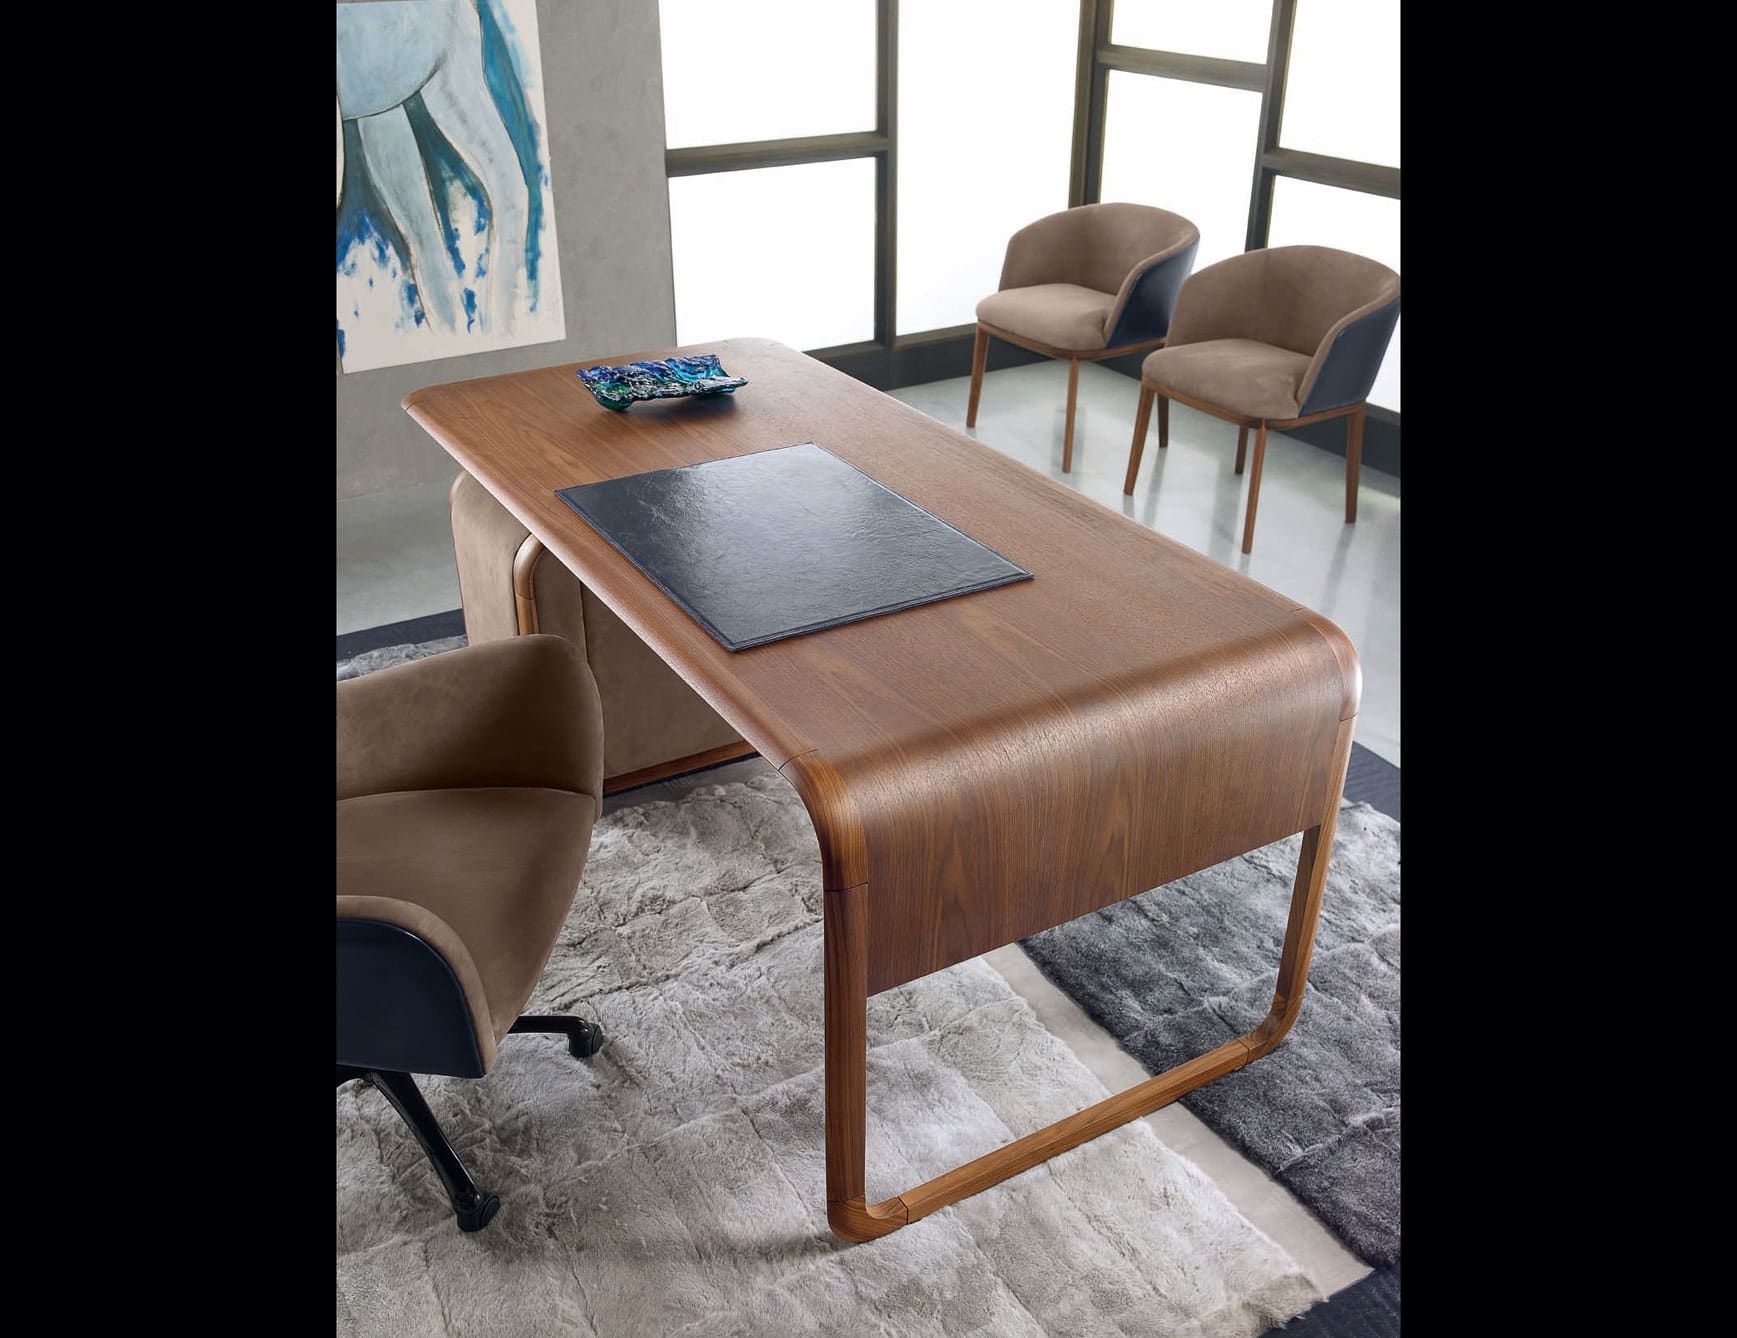 Woody modern Italian desk with brown Walnut wood